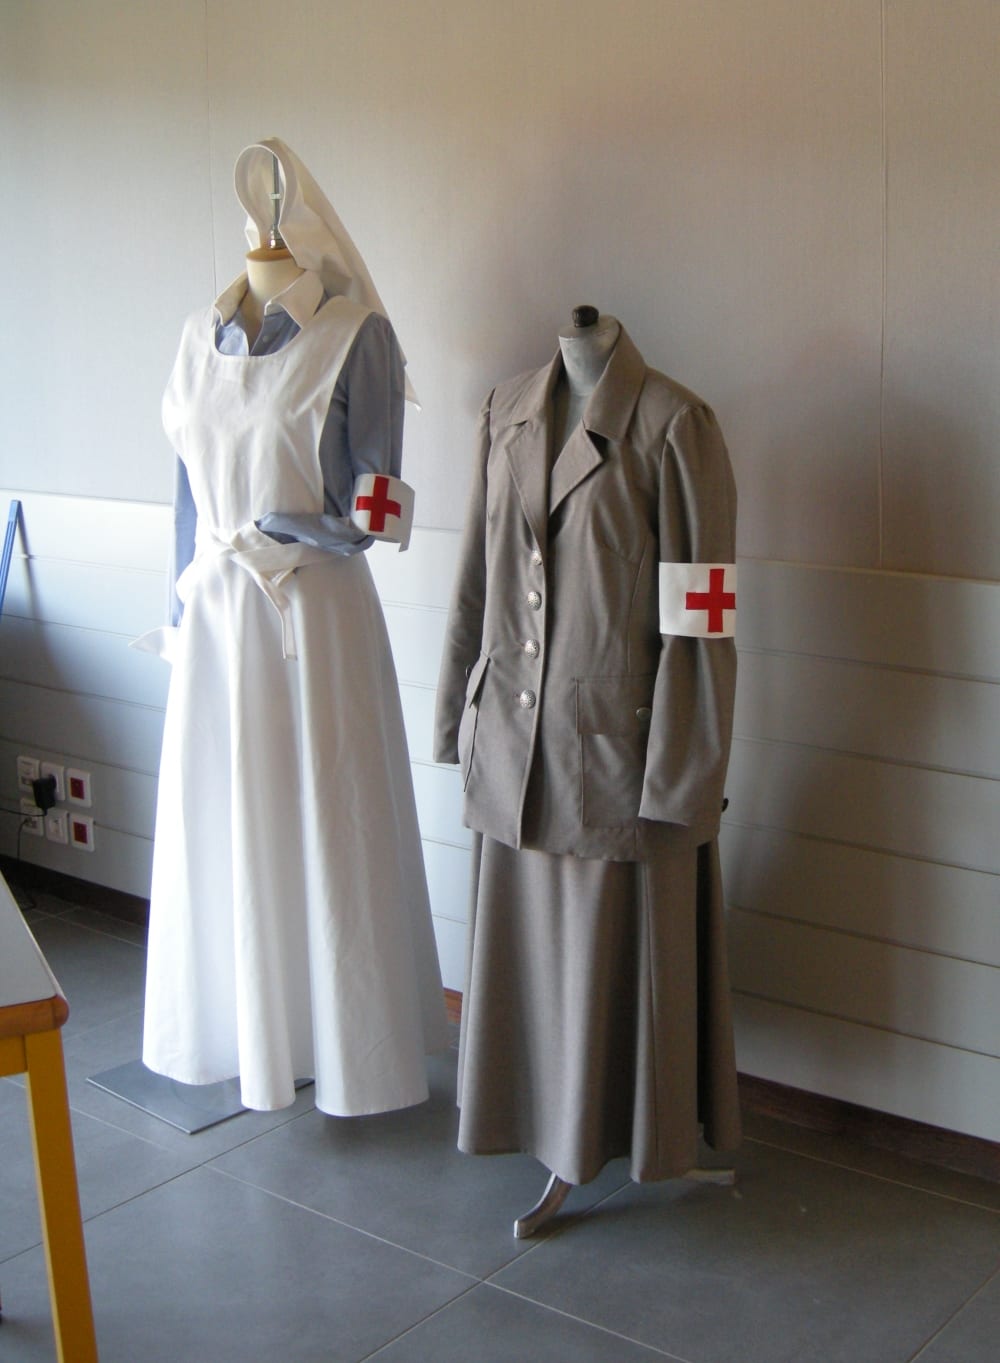 Uniforms made especially for the exhibition at Chanteloup